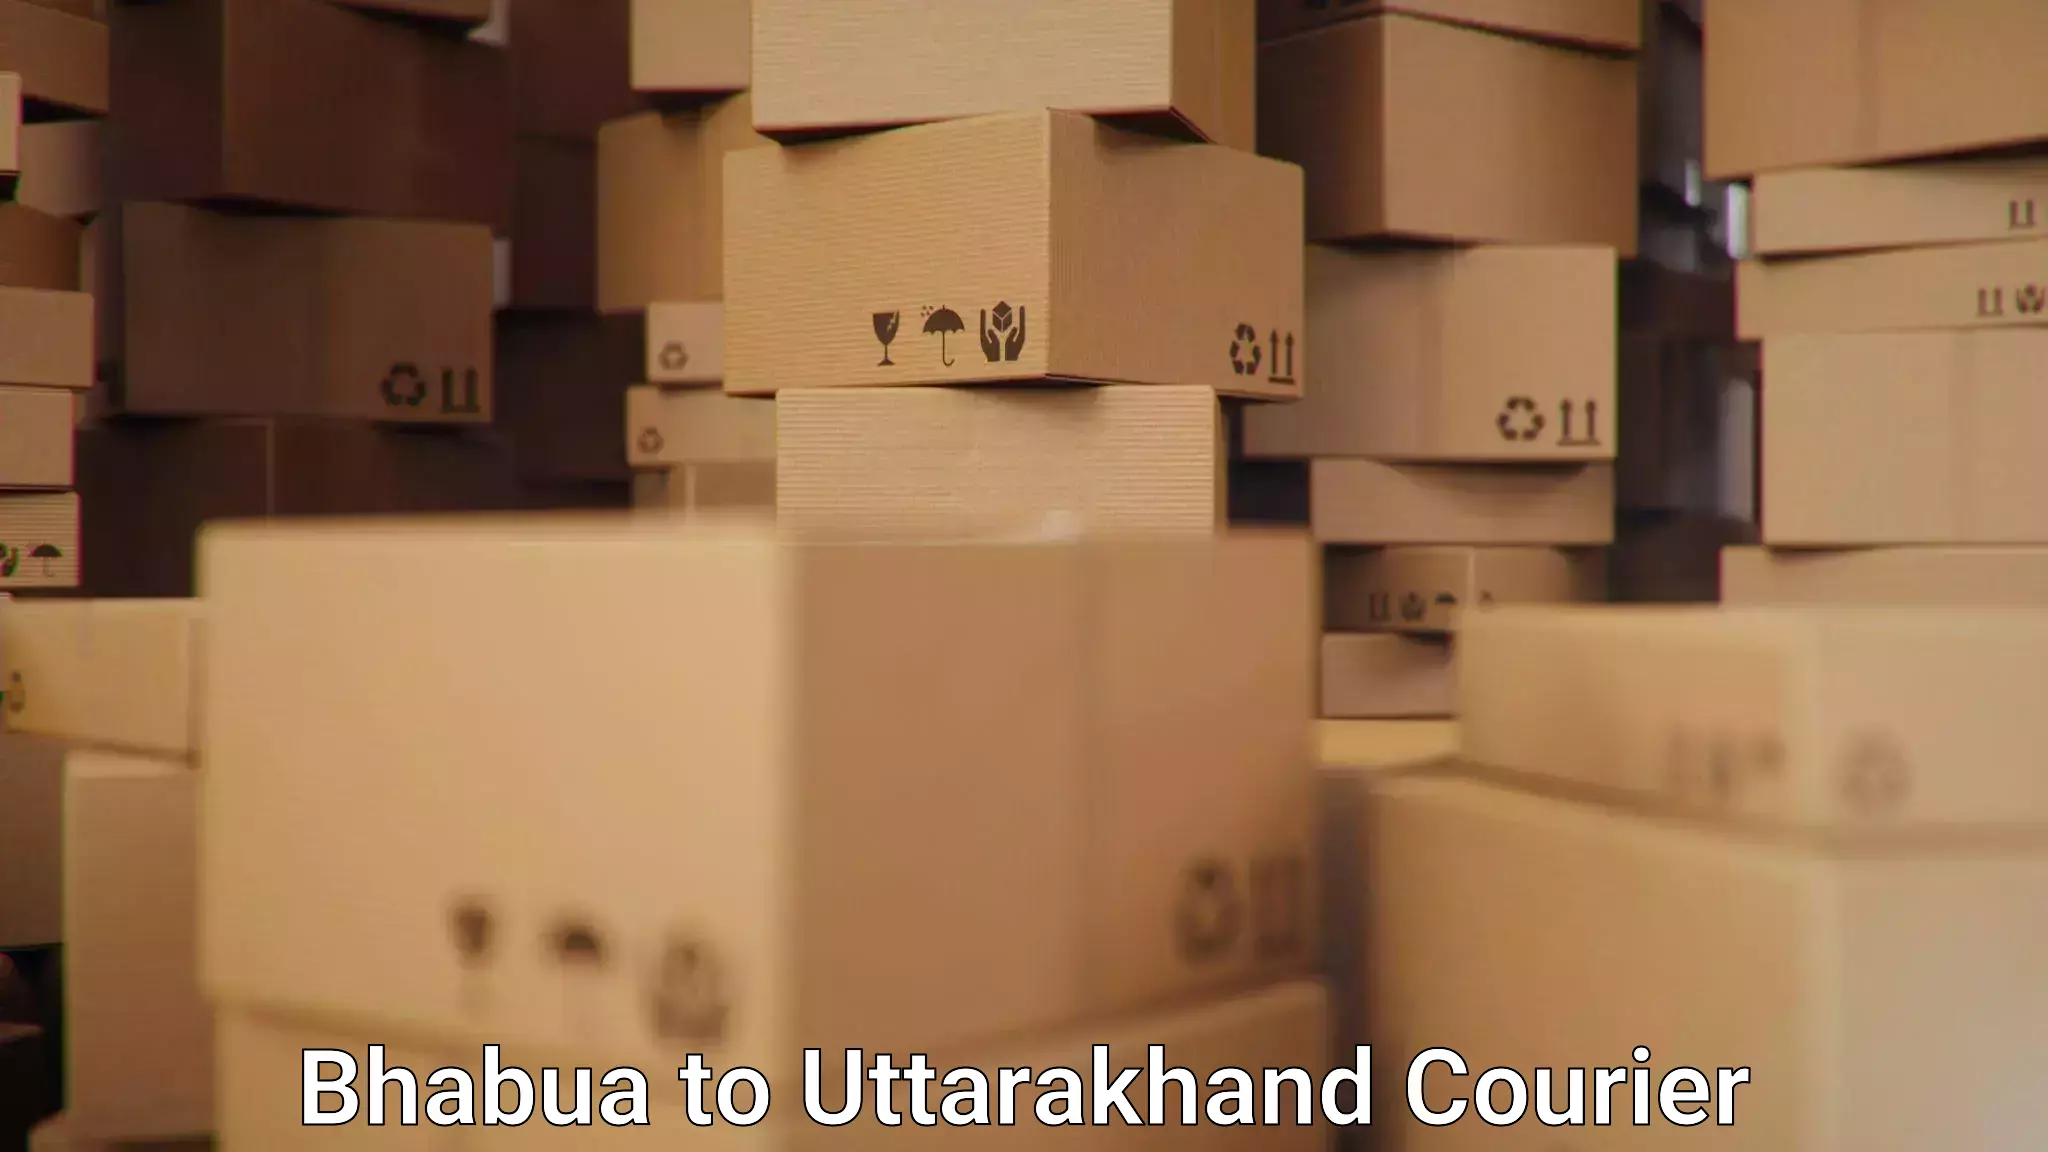 Advanced tracking systems in Bhabua to Uttarakhand